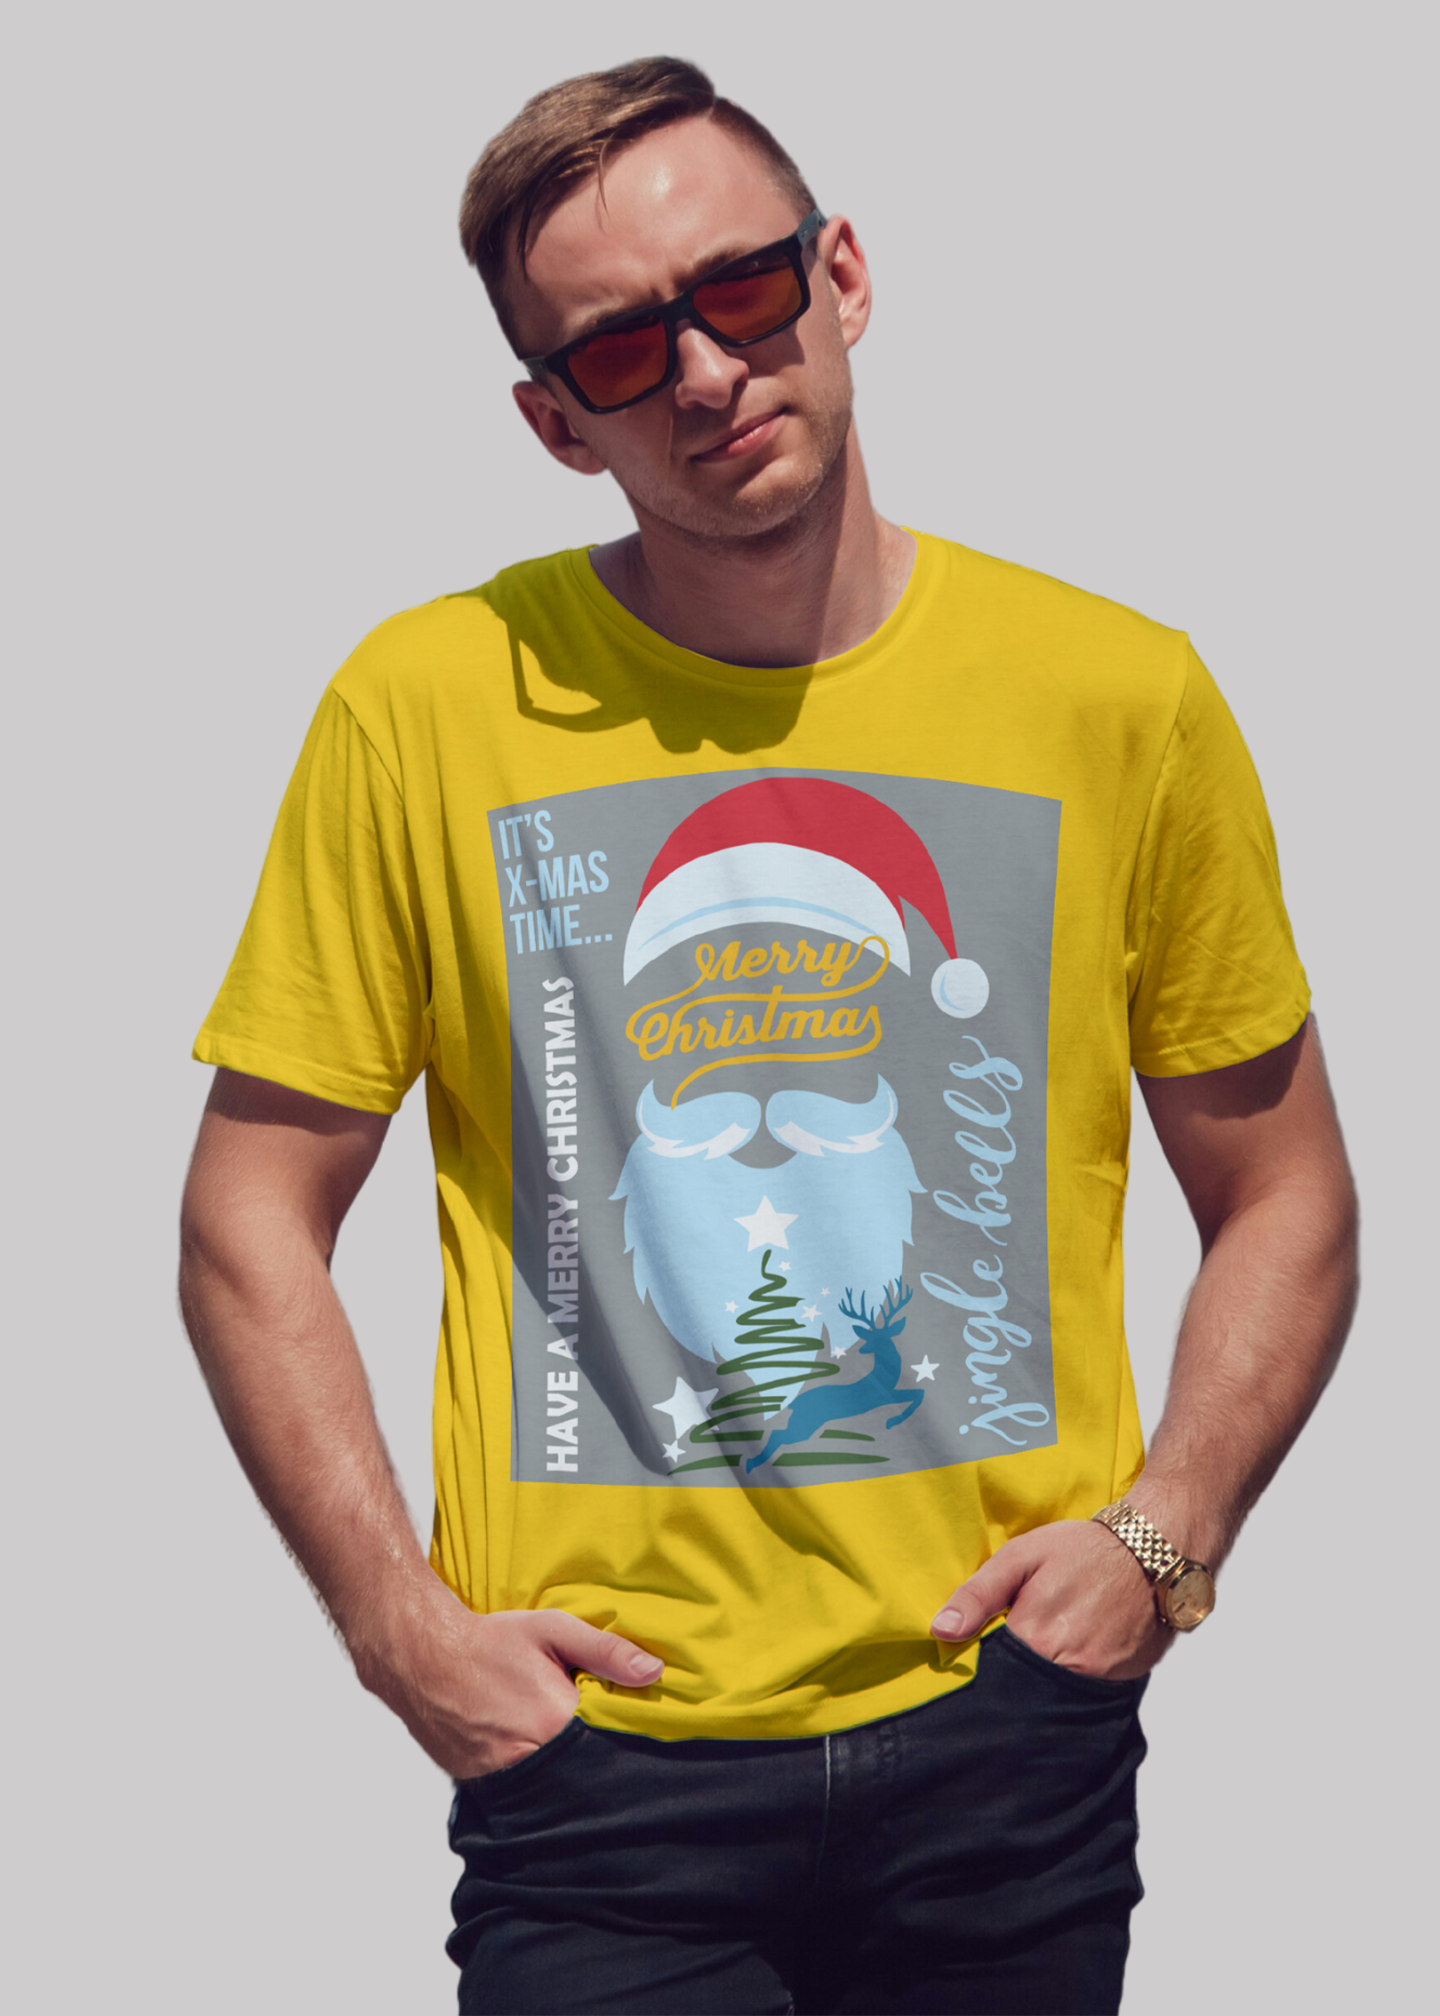 Merry Christmas Printed Half Sleeve Premium Cotton T-shirt For Men